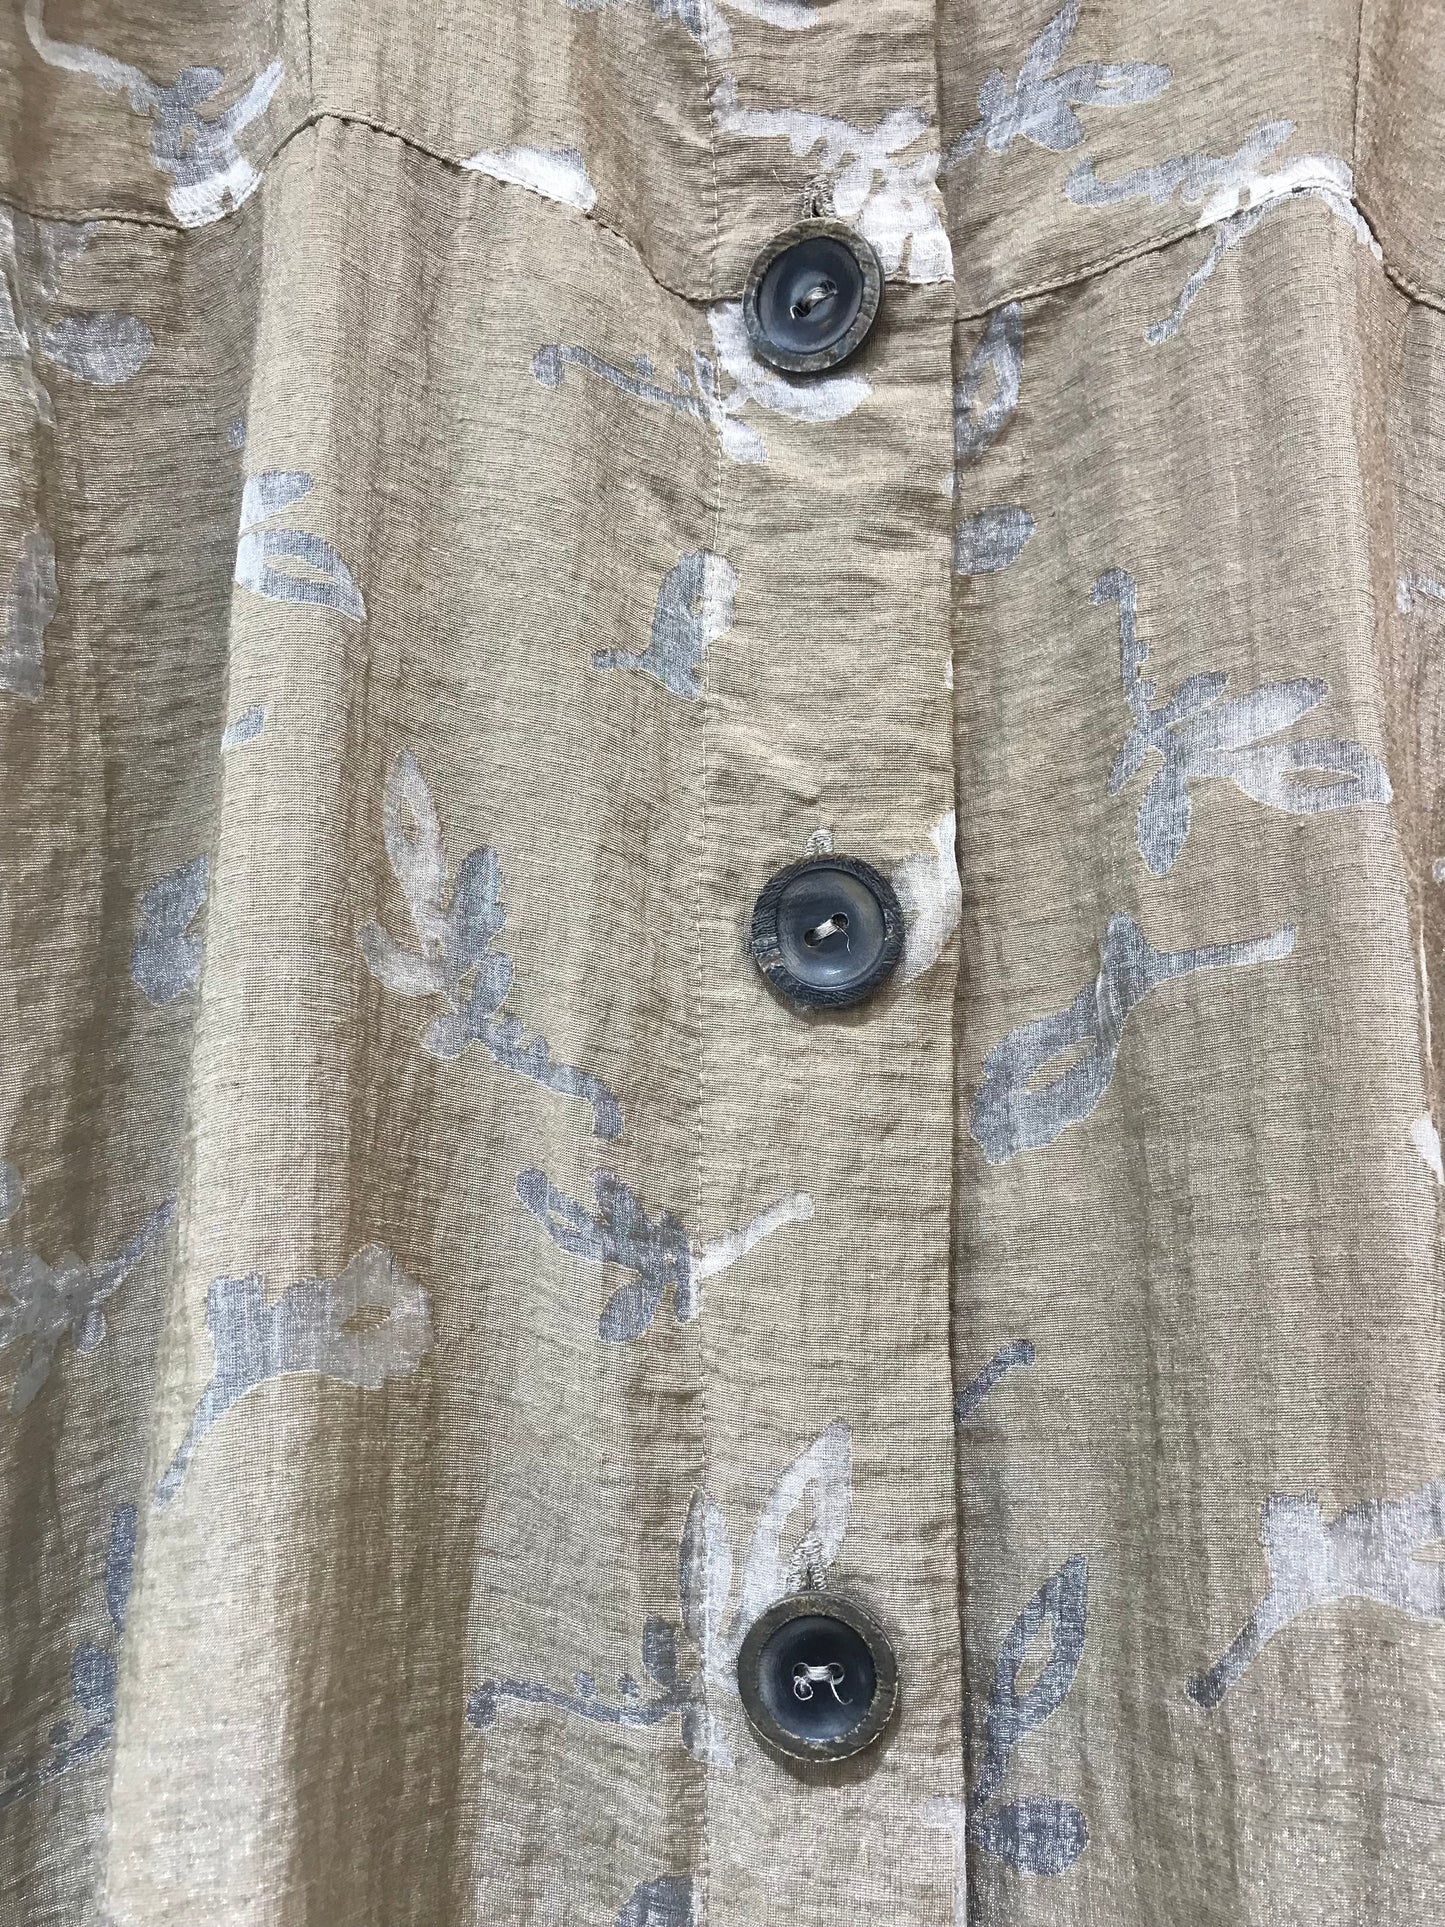 Vintage 2way Dress [G24582]